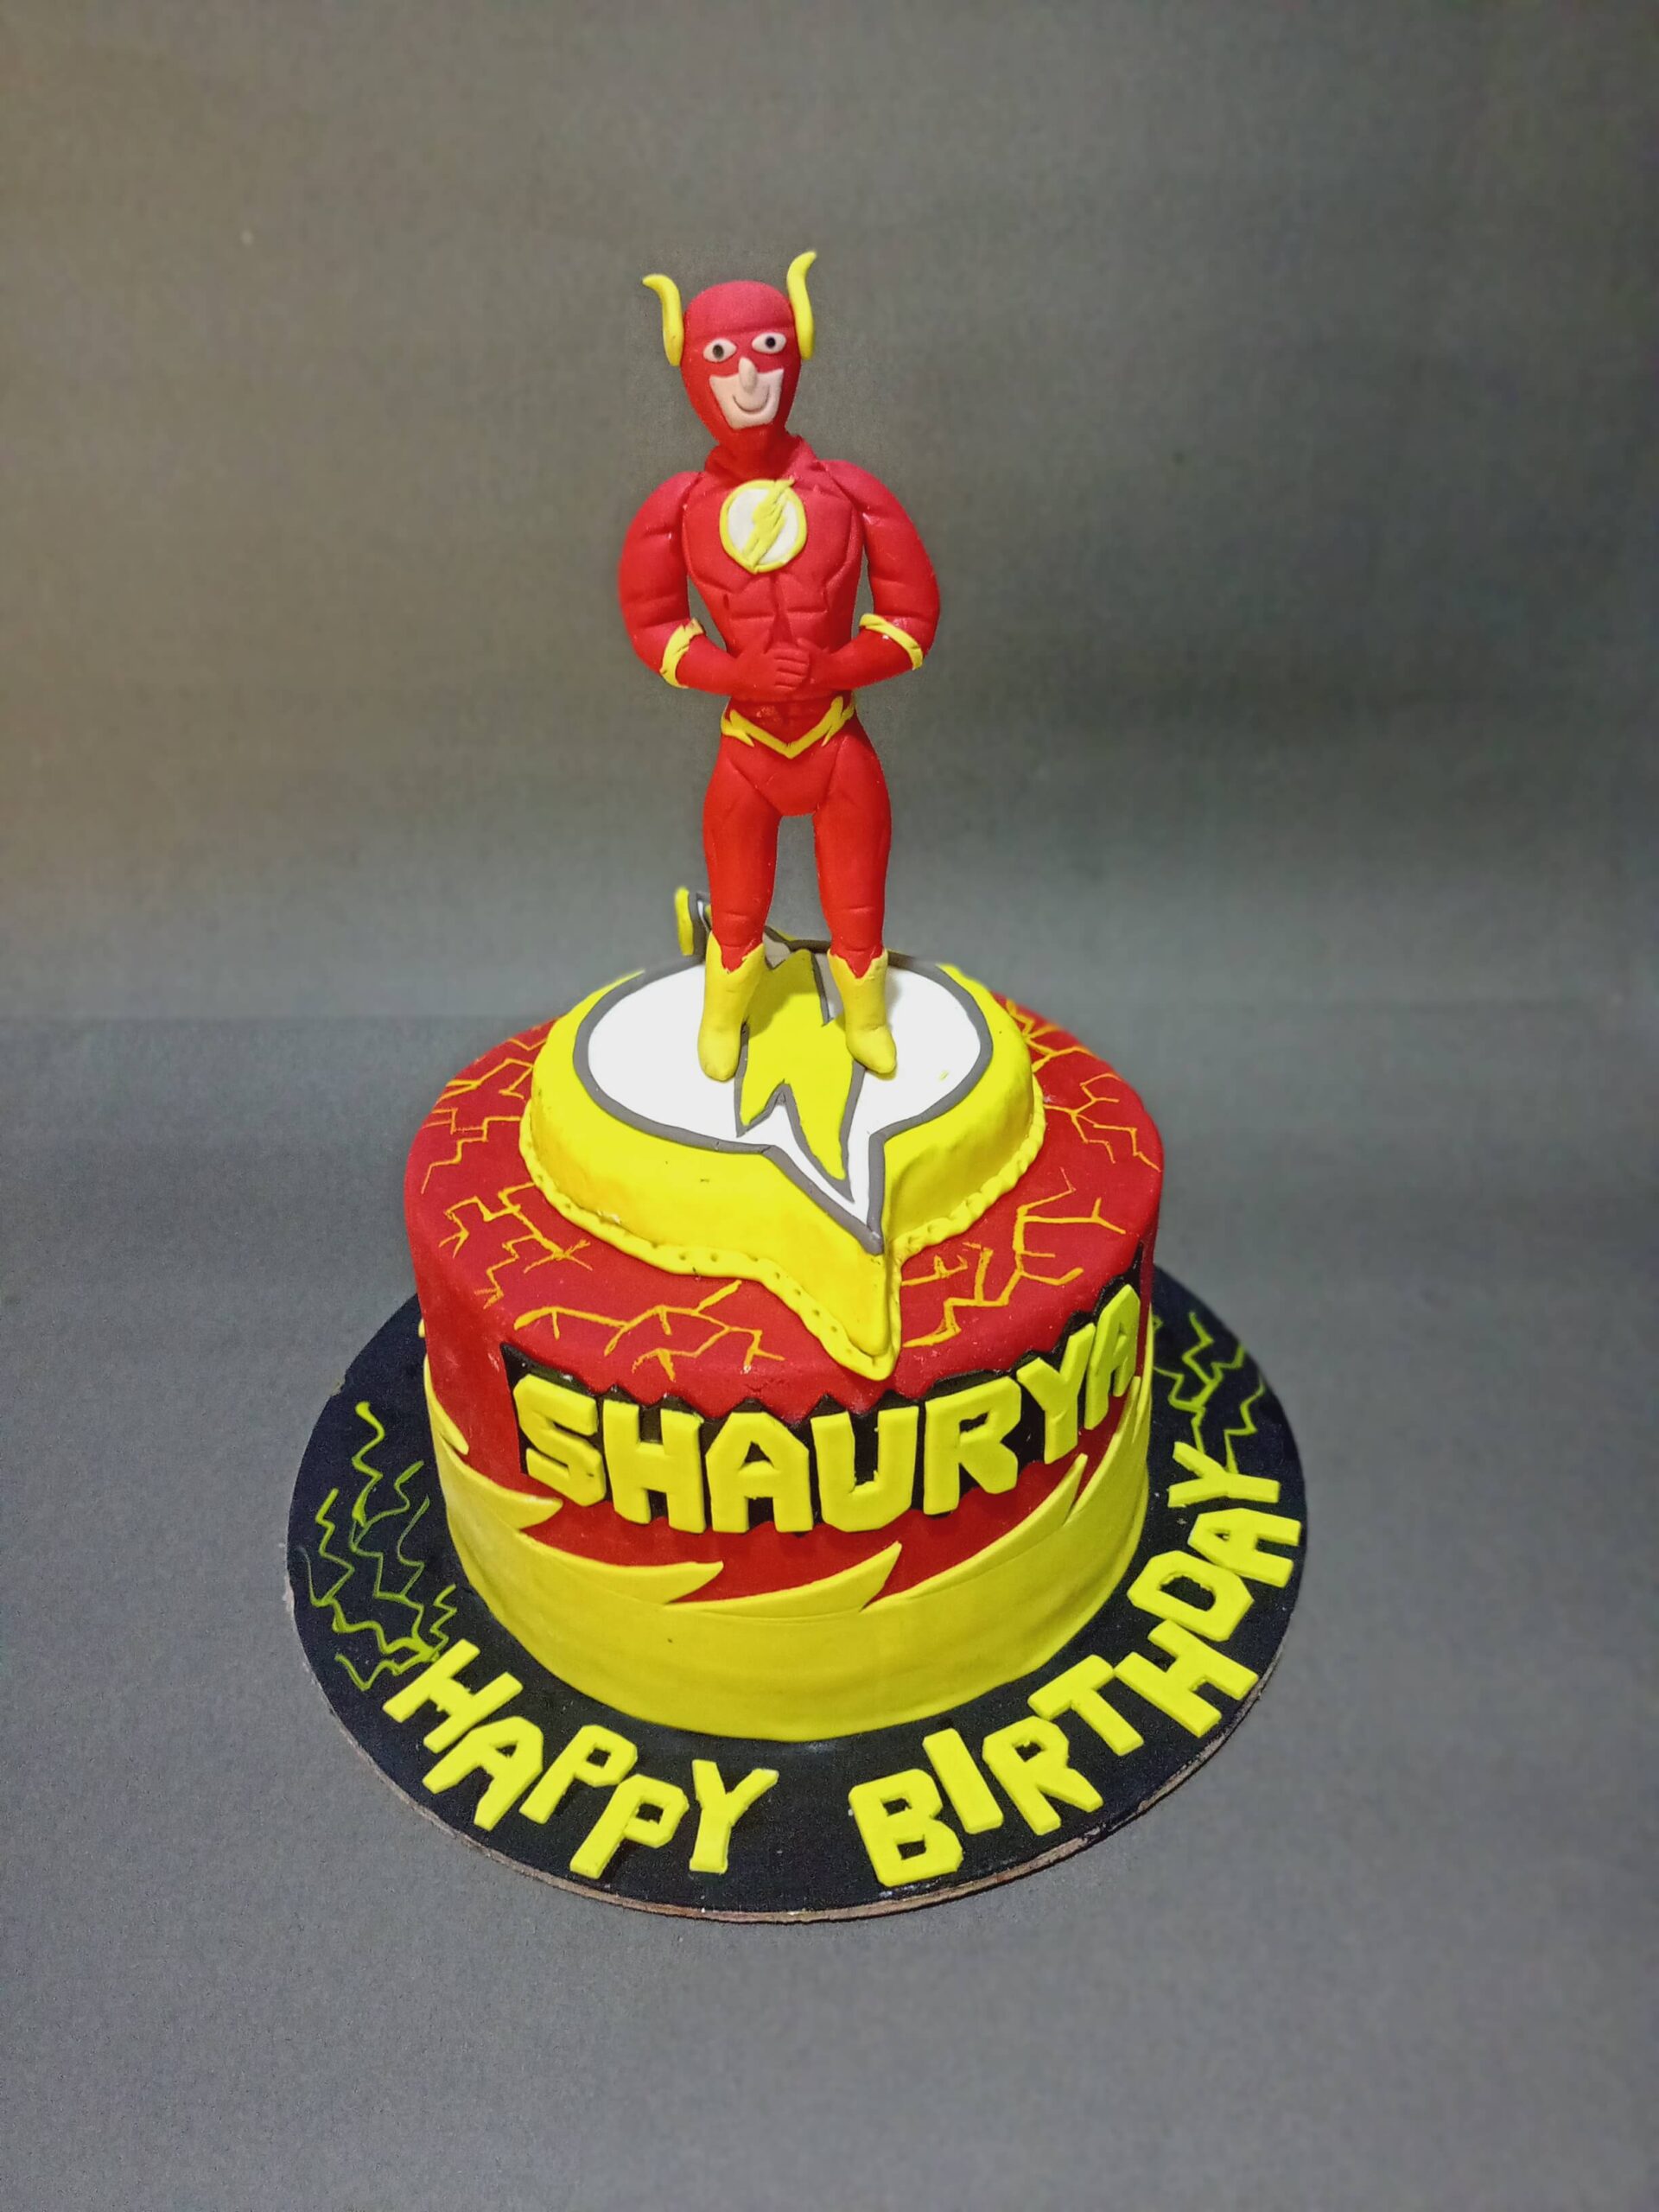 Iron Man avengers cakes singapore/avengers movie sg - River Ash Bakery